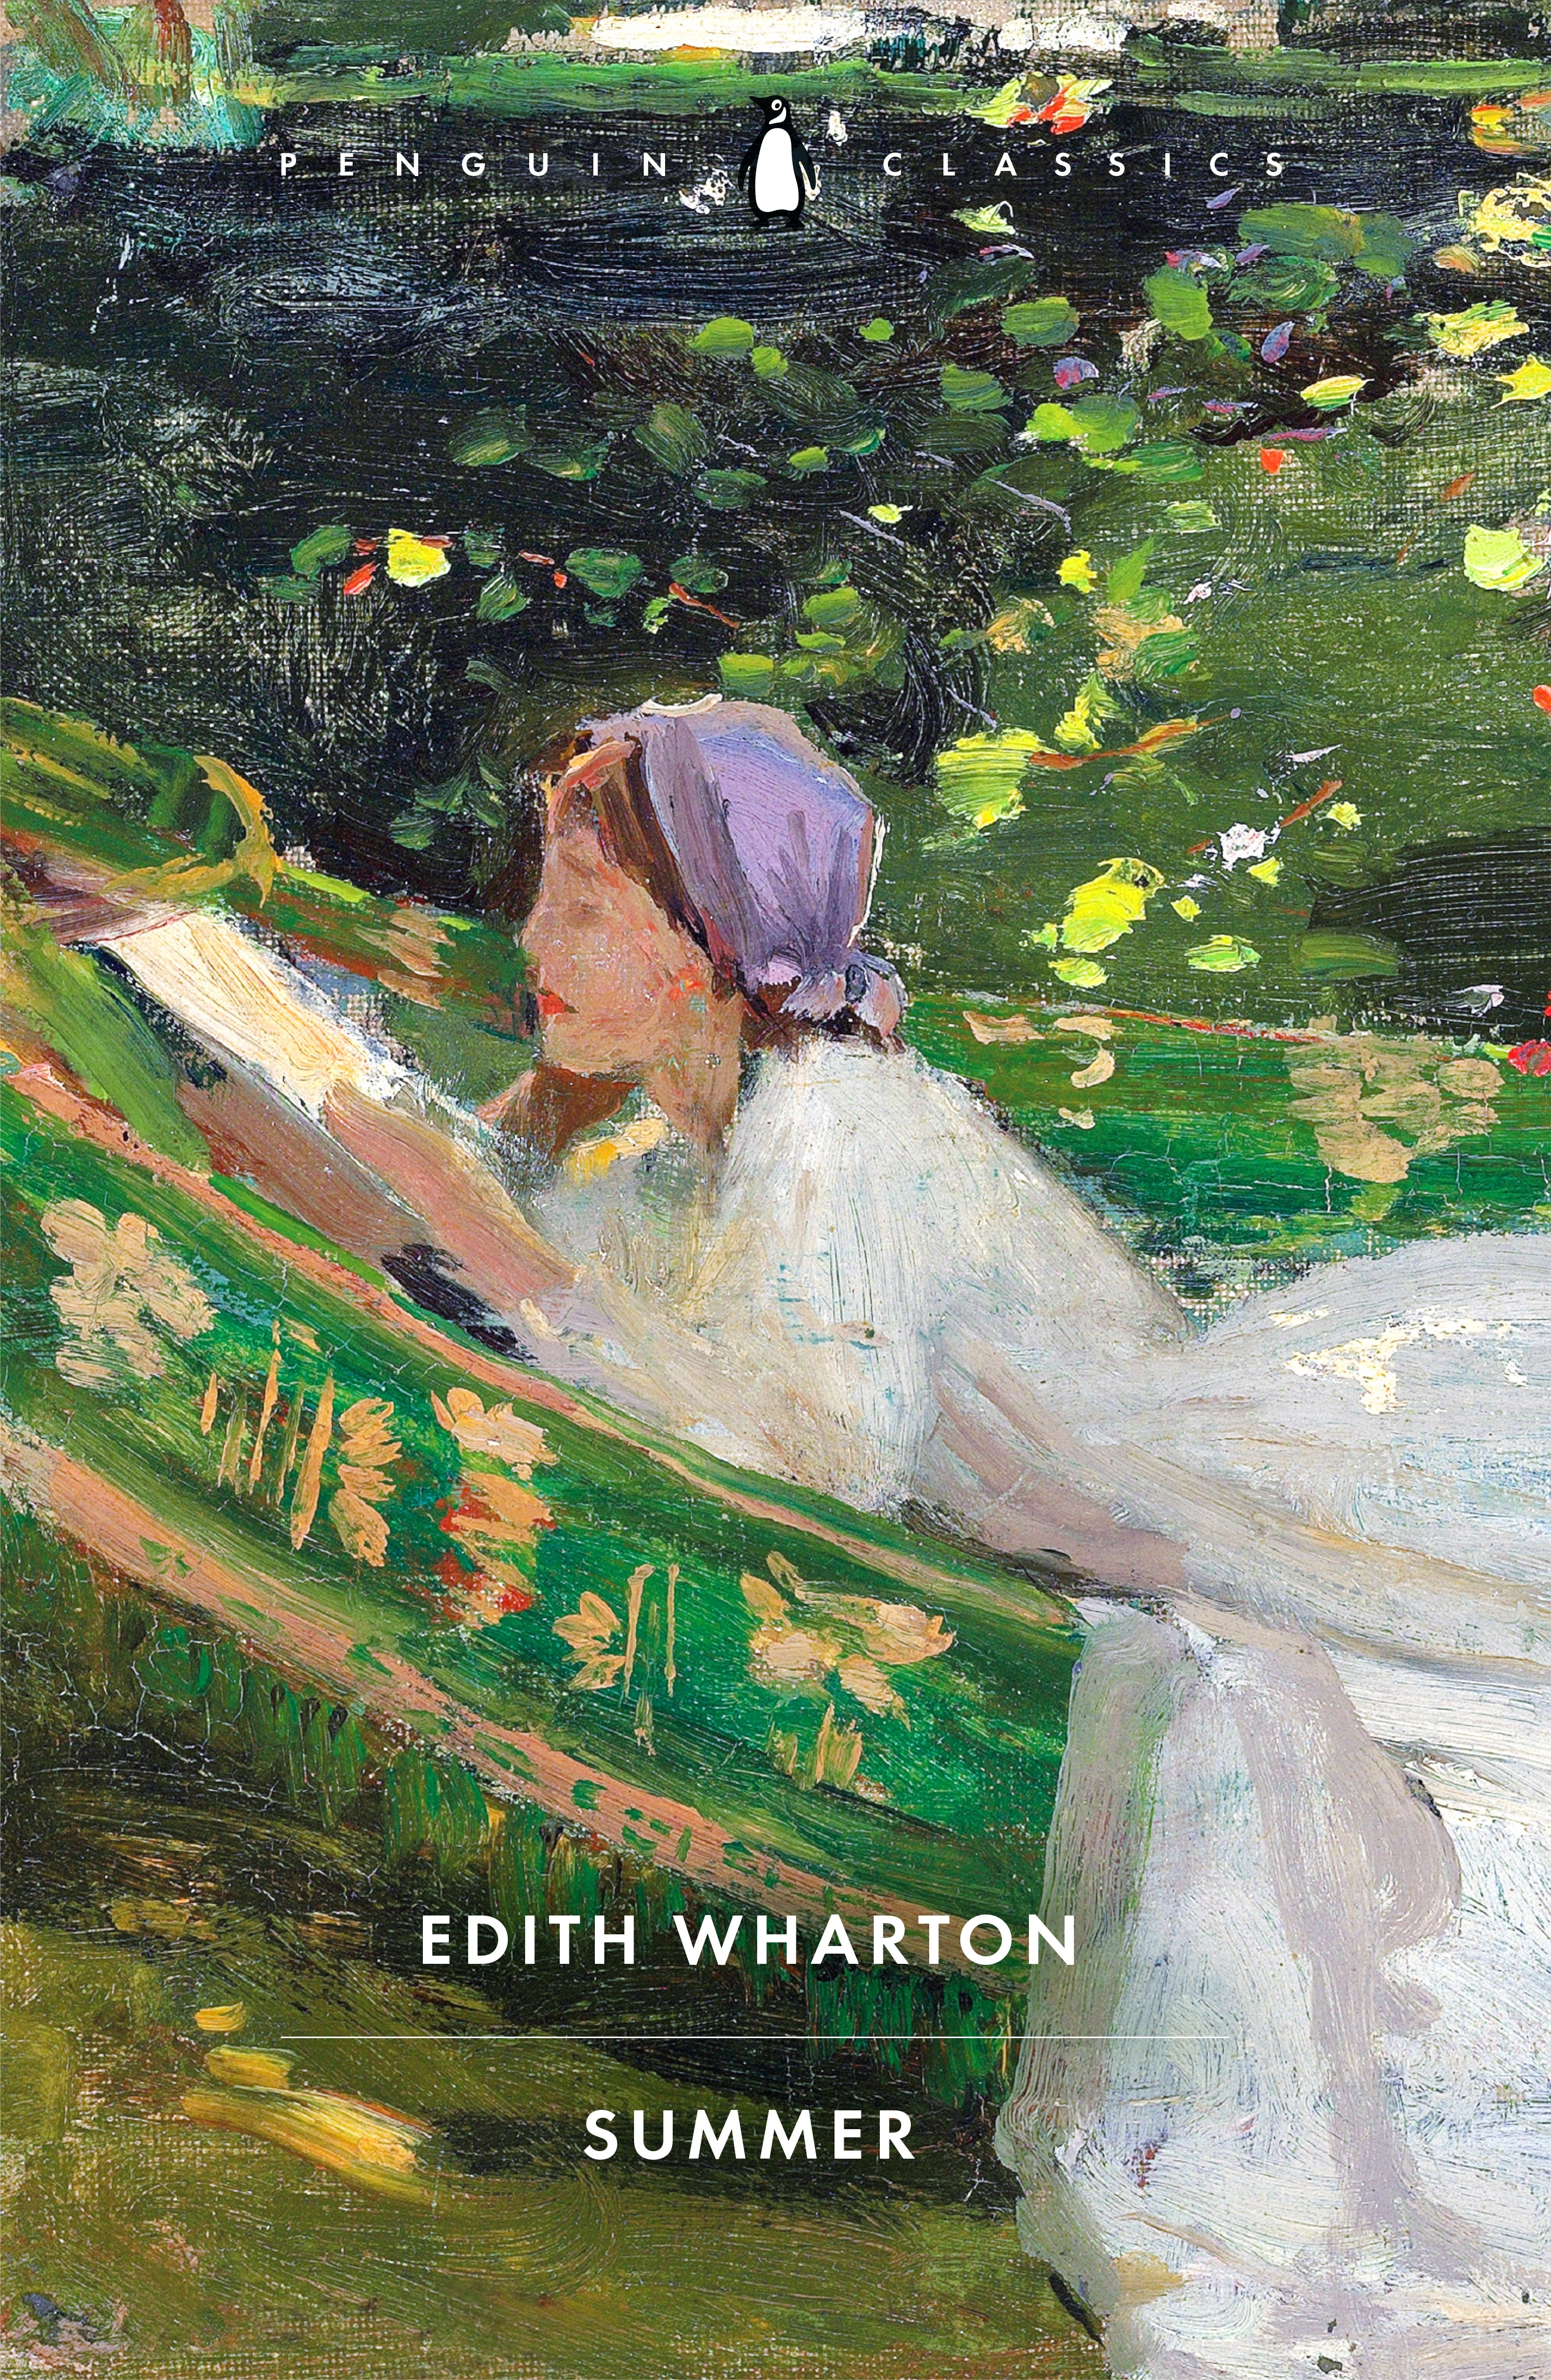 Book “Summer” by Edith Wharton — July 4, 2019